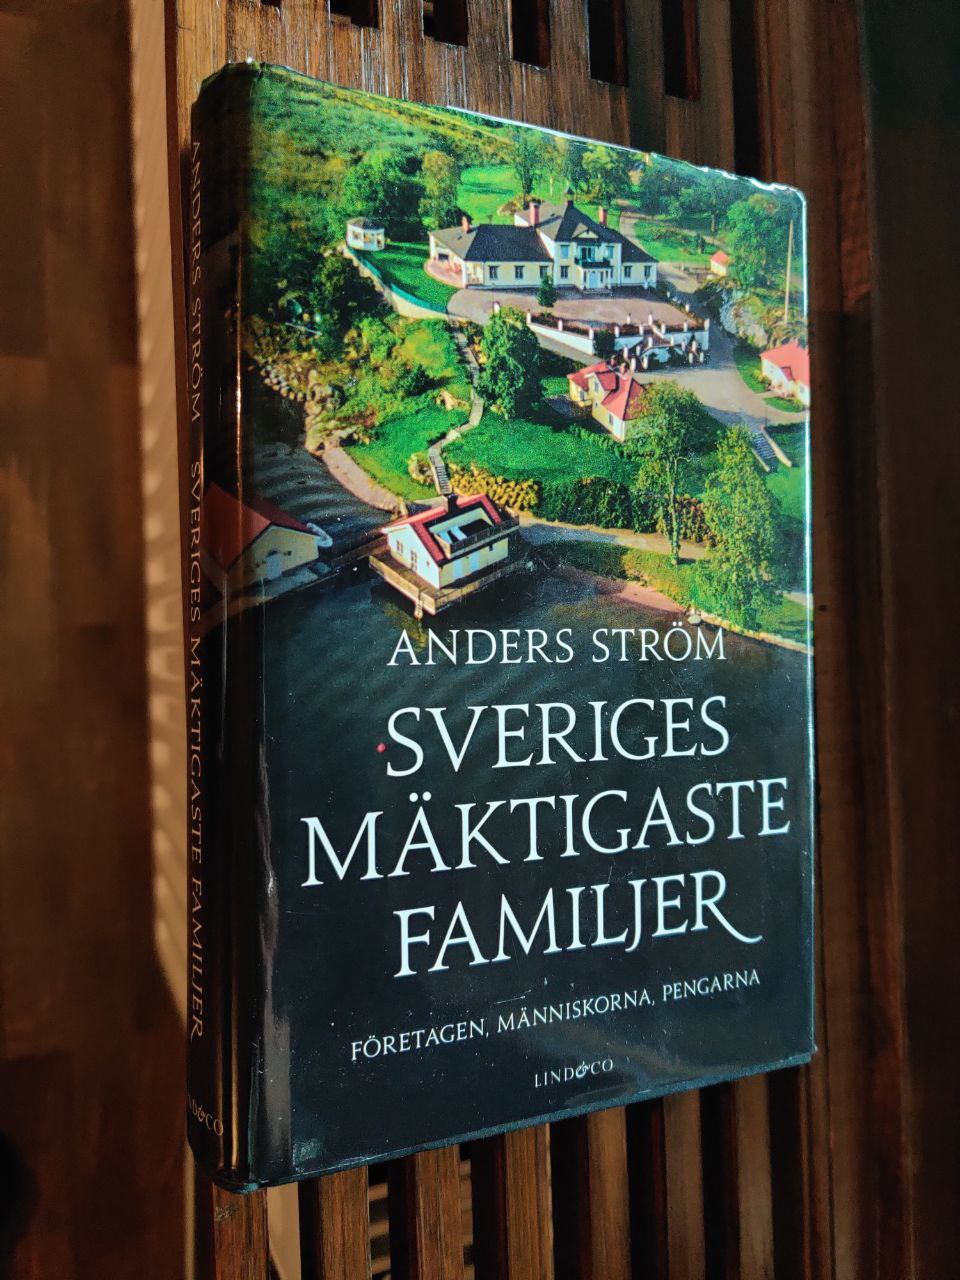 “Sveriges mäktigaste familjer” cover